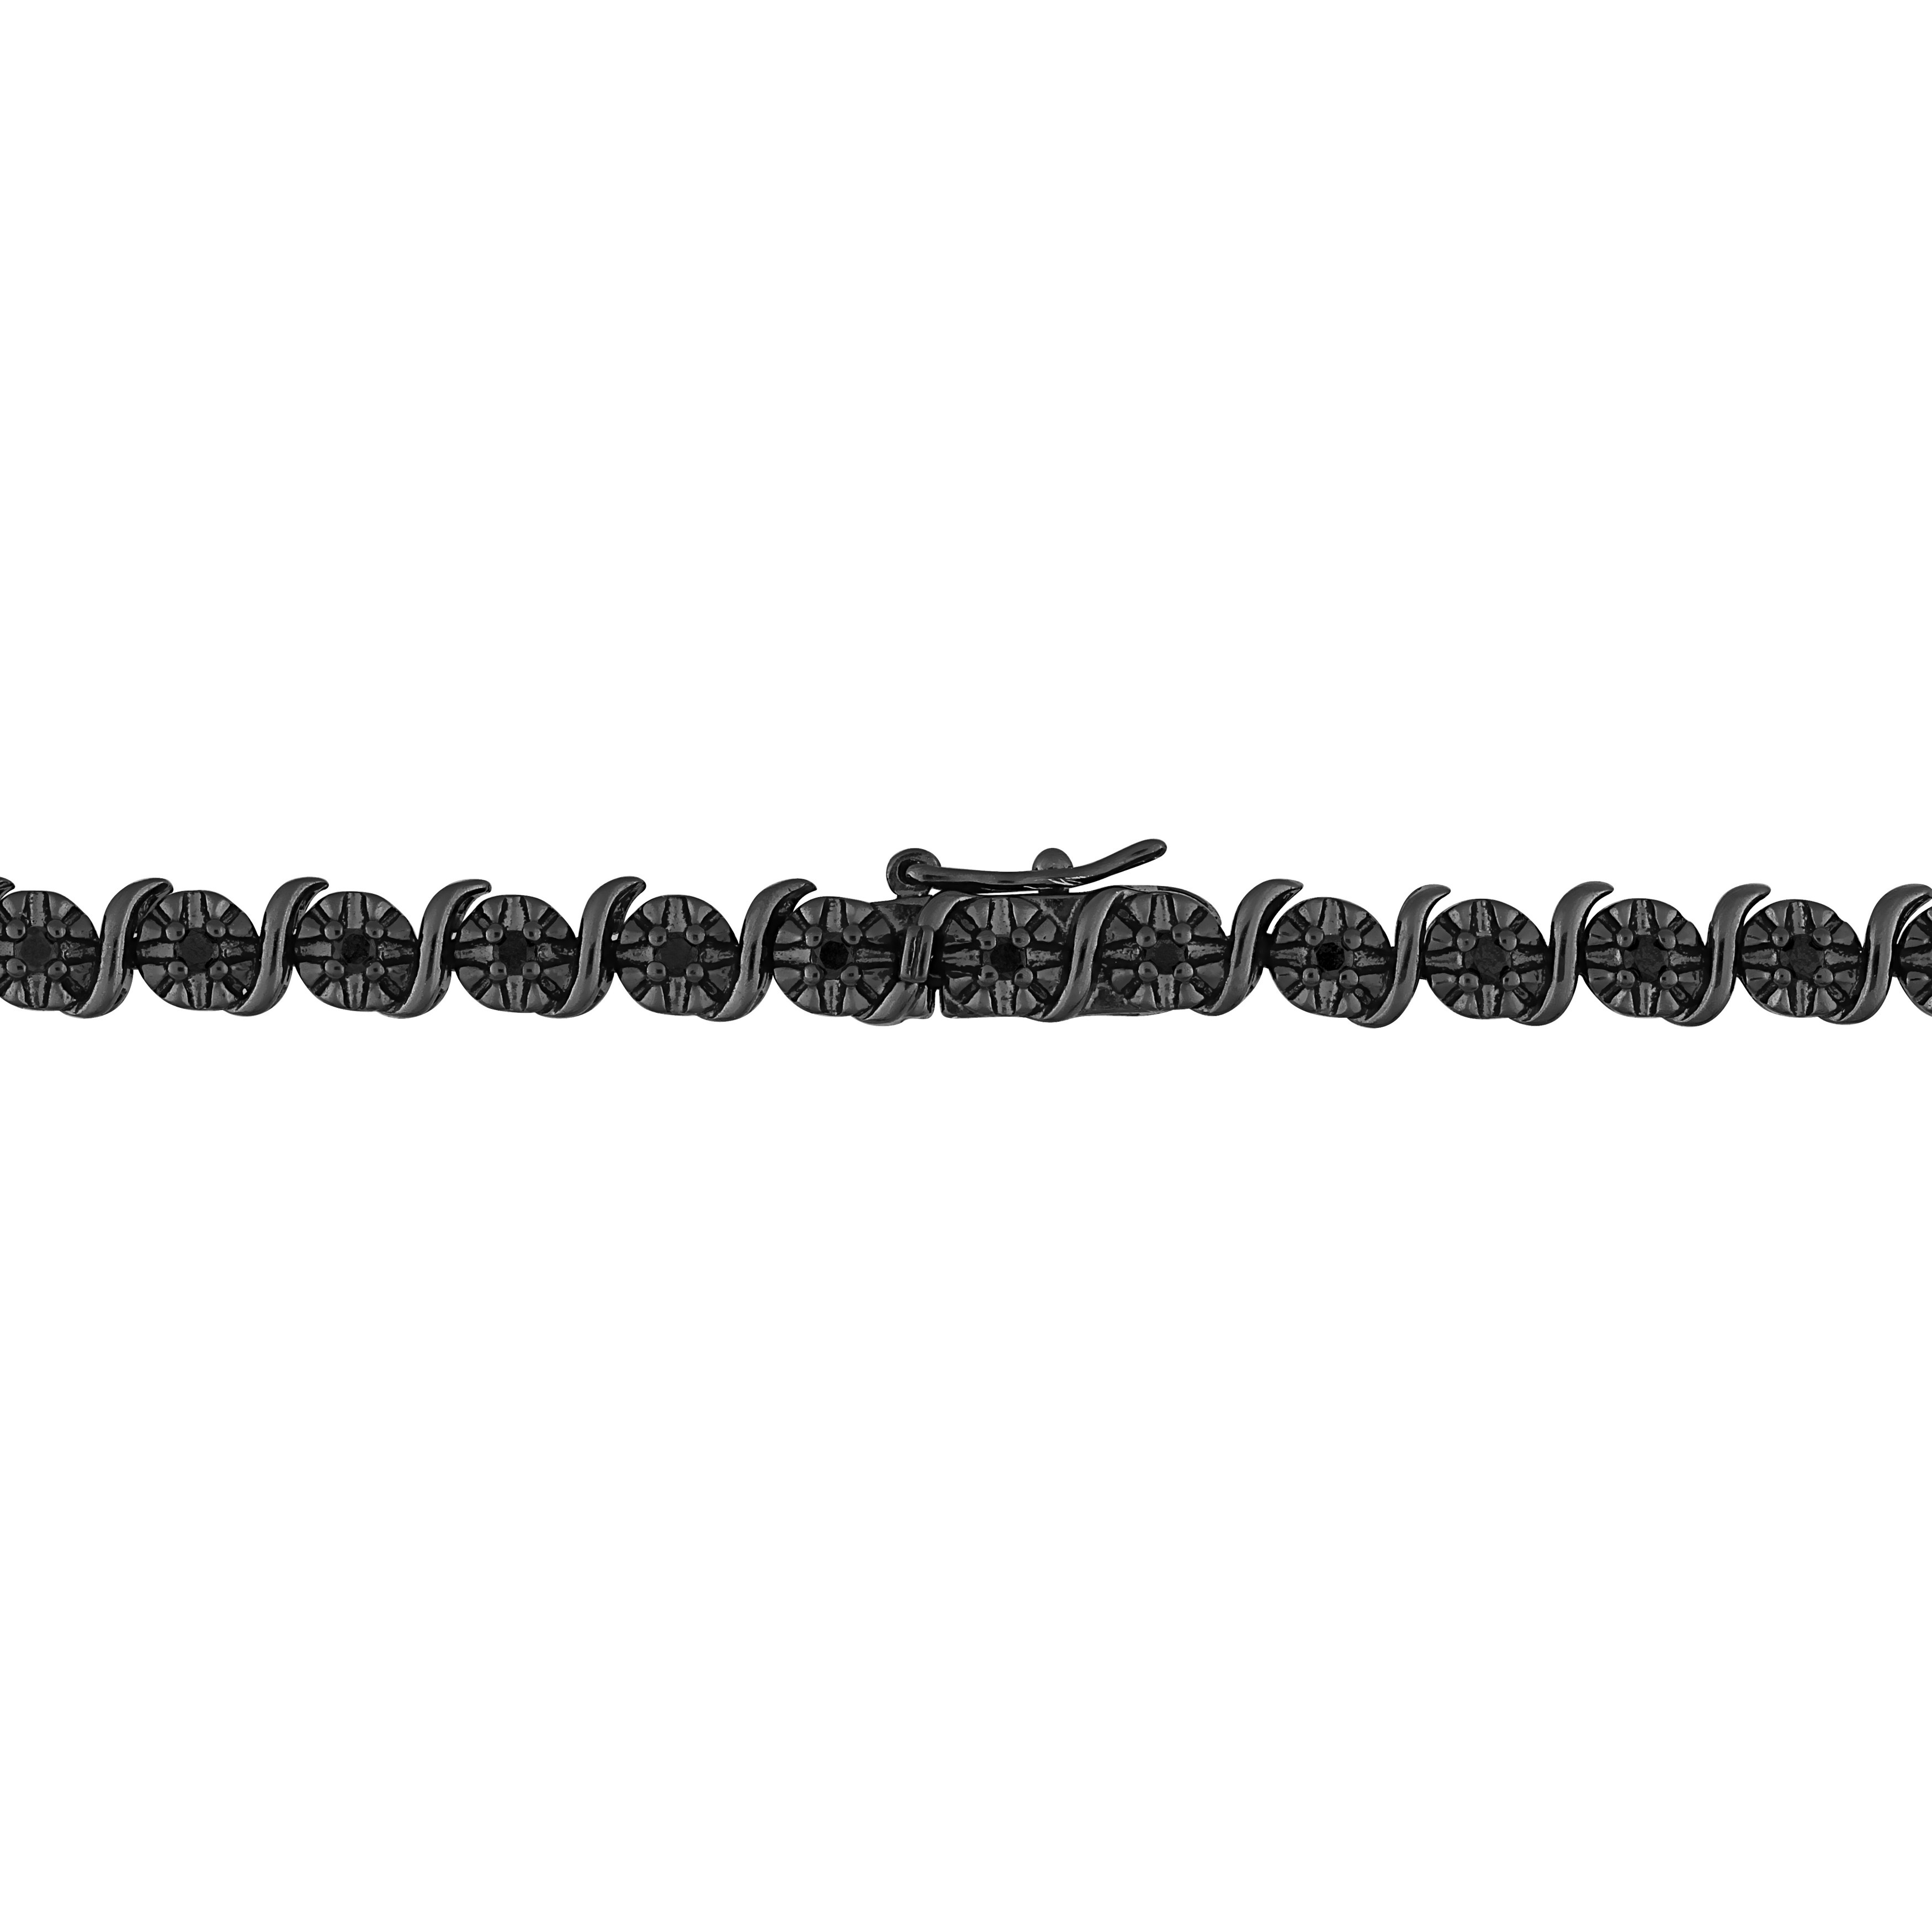 1 CT Black Diamond TW 7.25 Bracelet in Sterling Silver with Black Rhodium